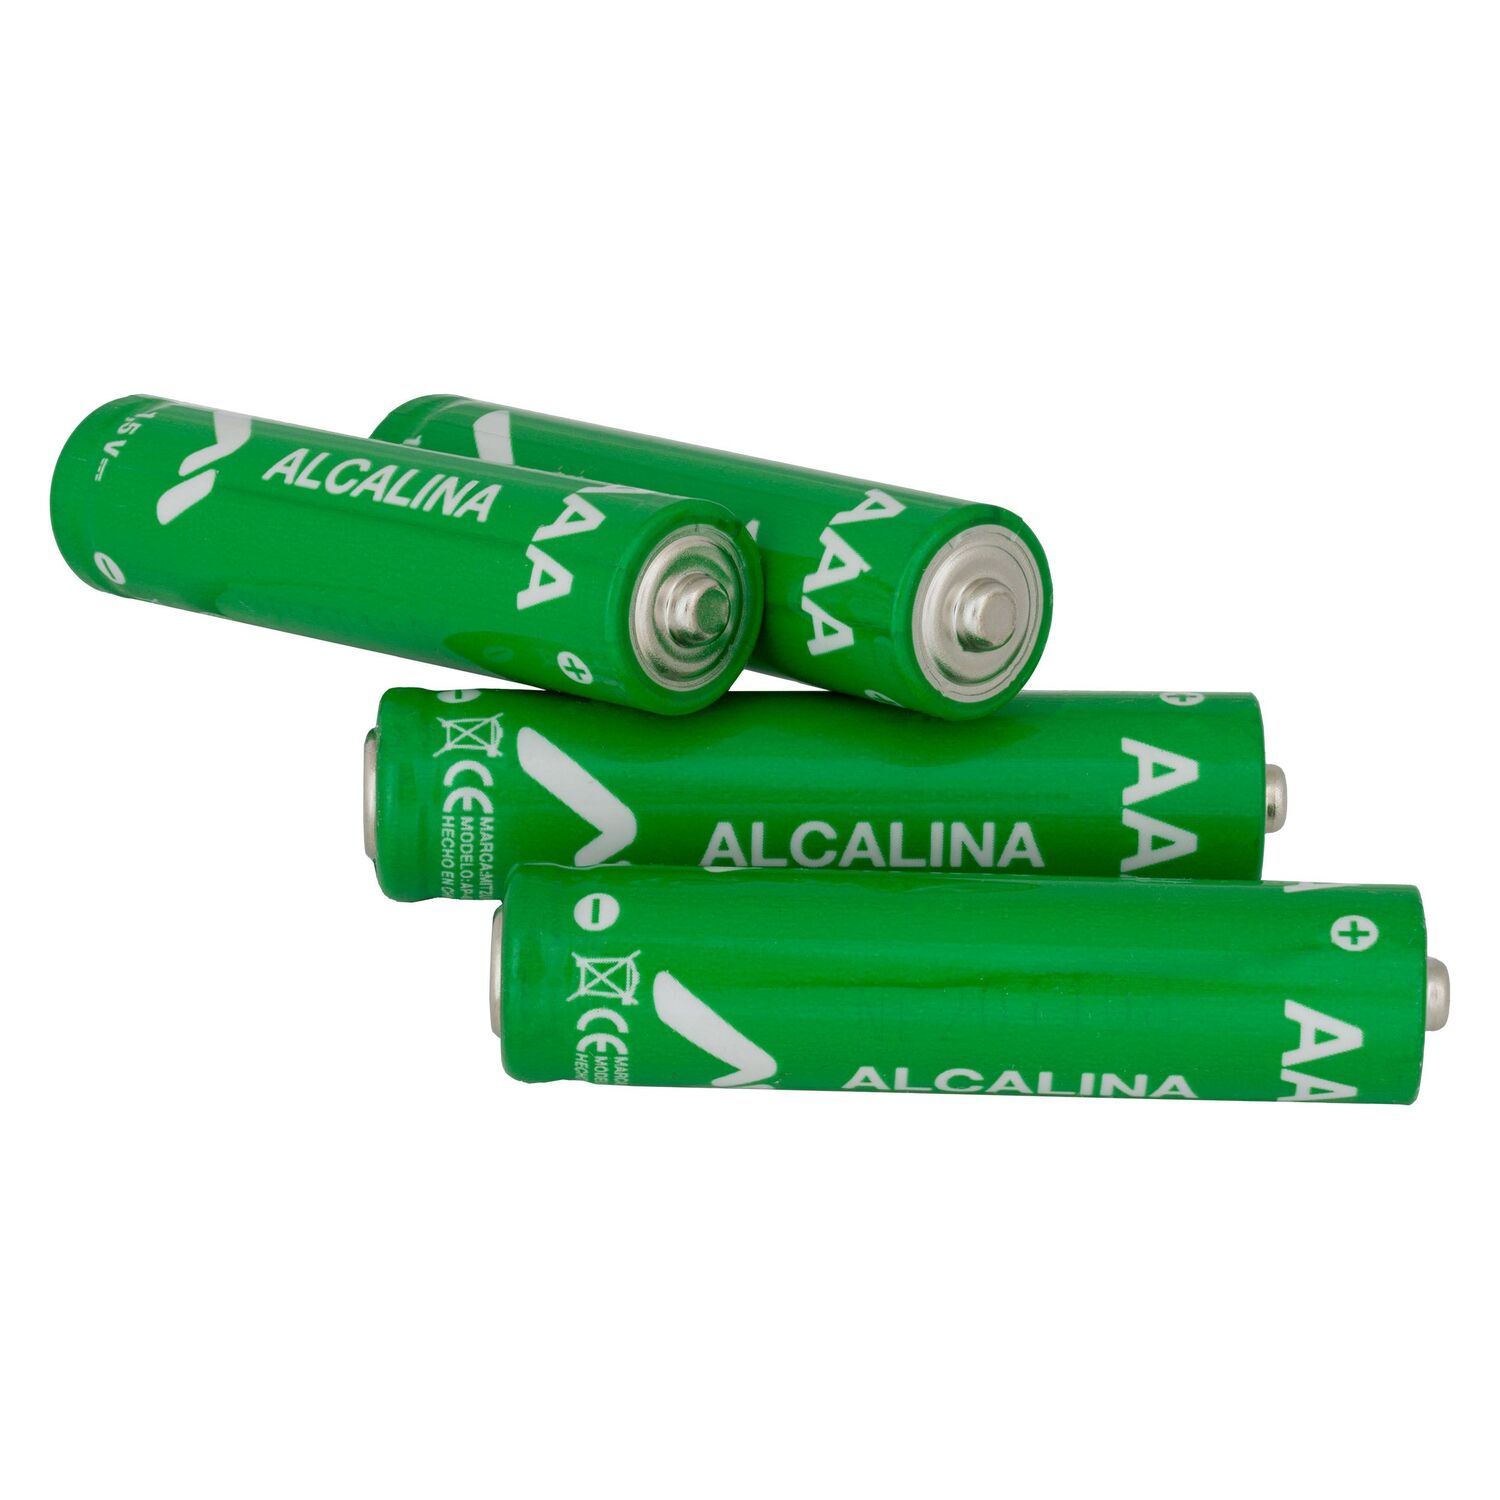 Paquete de 4 pilas alcalinas AAA 1.5Vcc [A0001940] - $25.00 : Clikstore